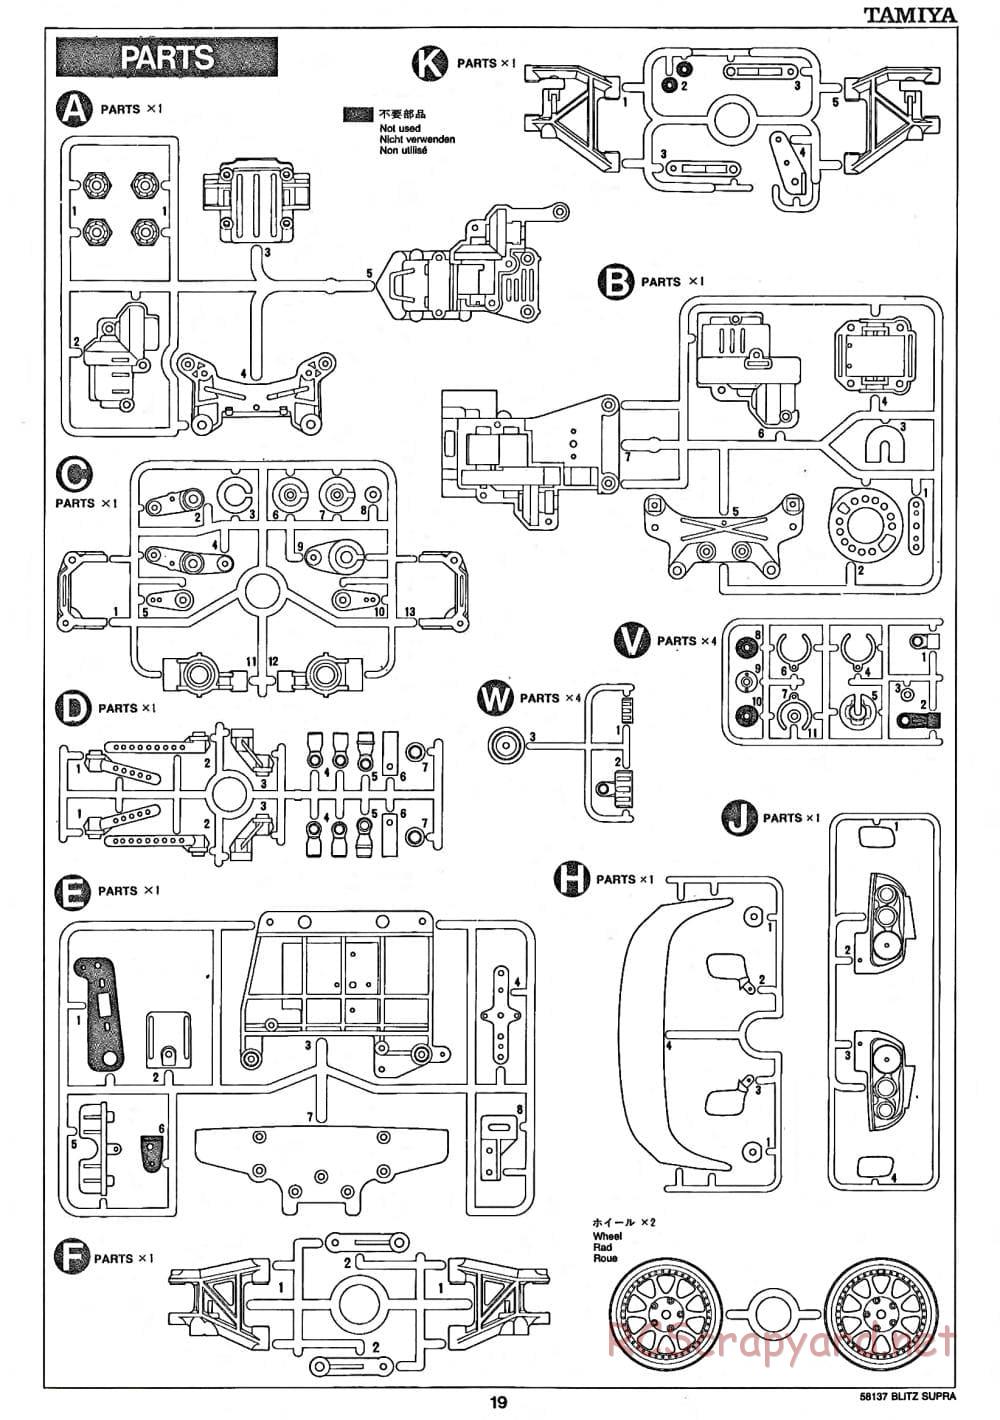 Tamiya - Blitz Toyota Supra Gr.N - TA-02 Chassis - Manual - Page 19